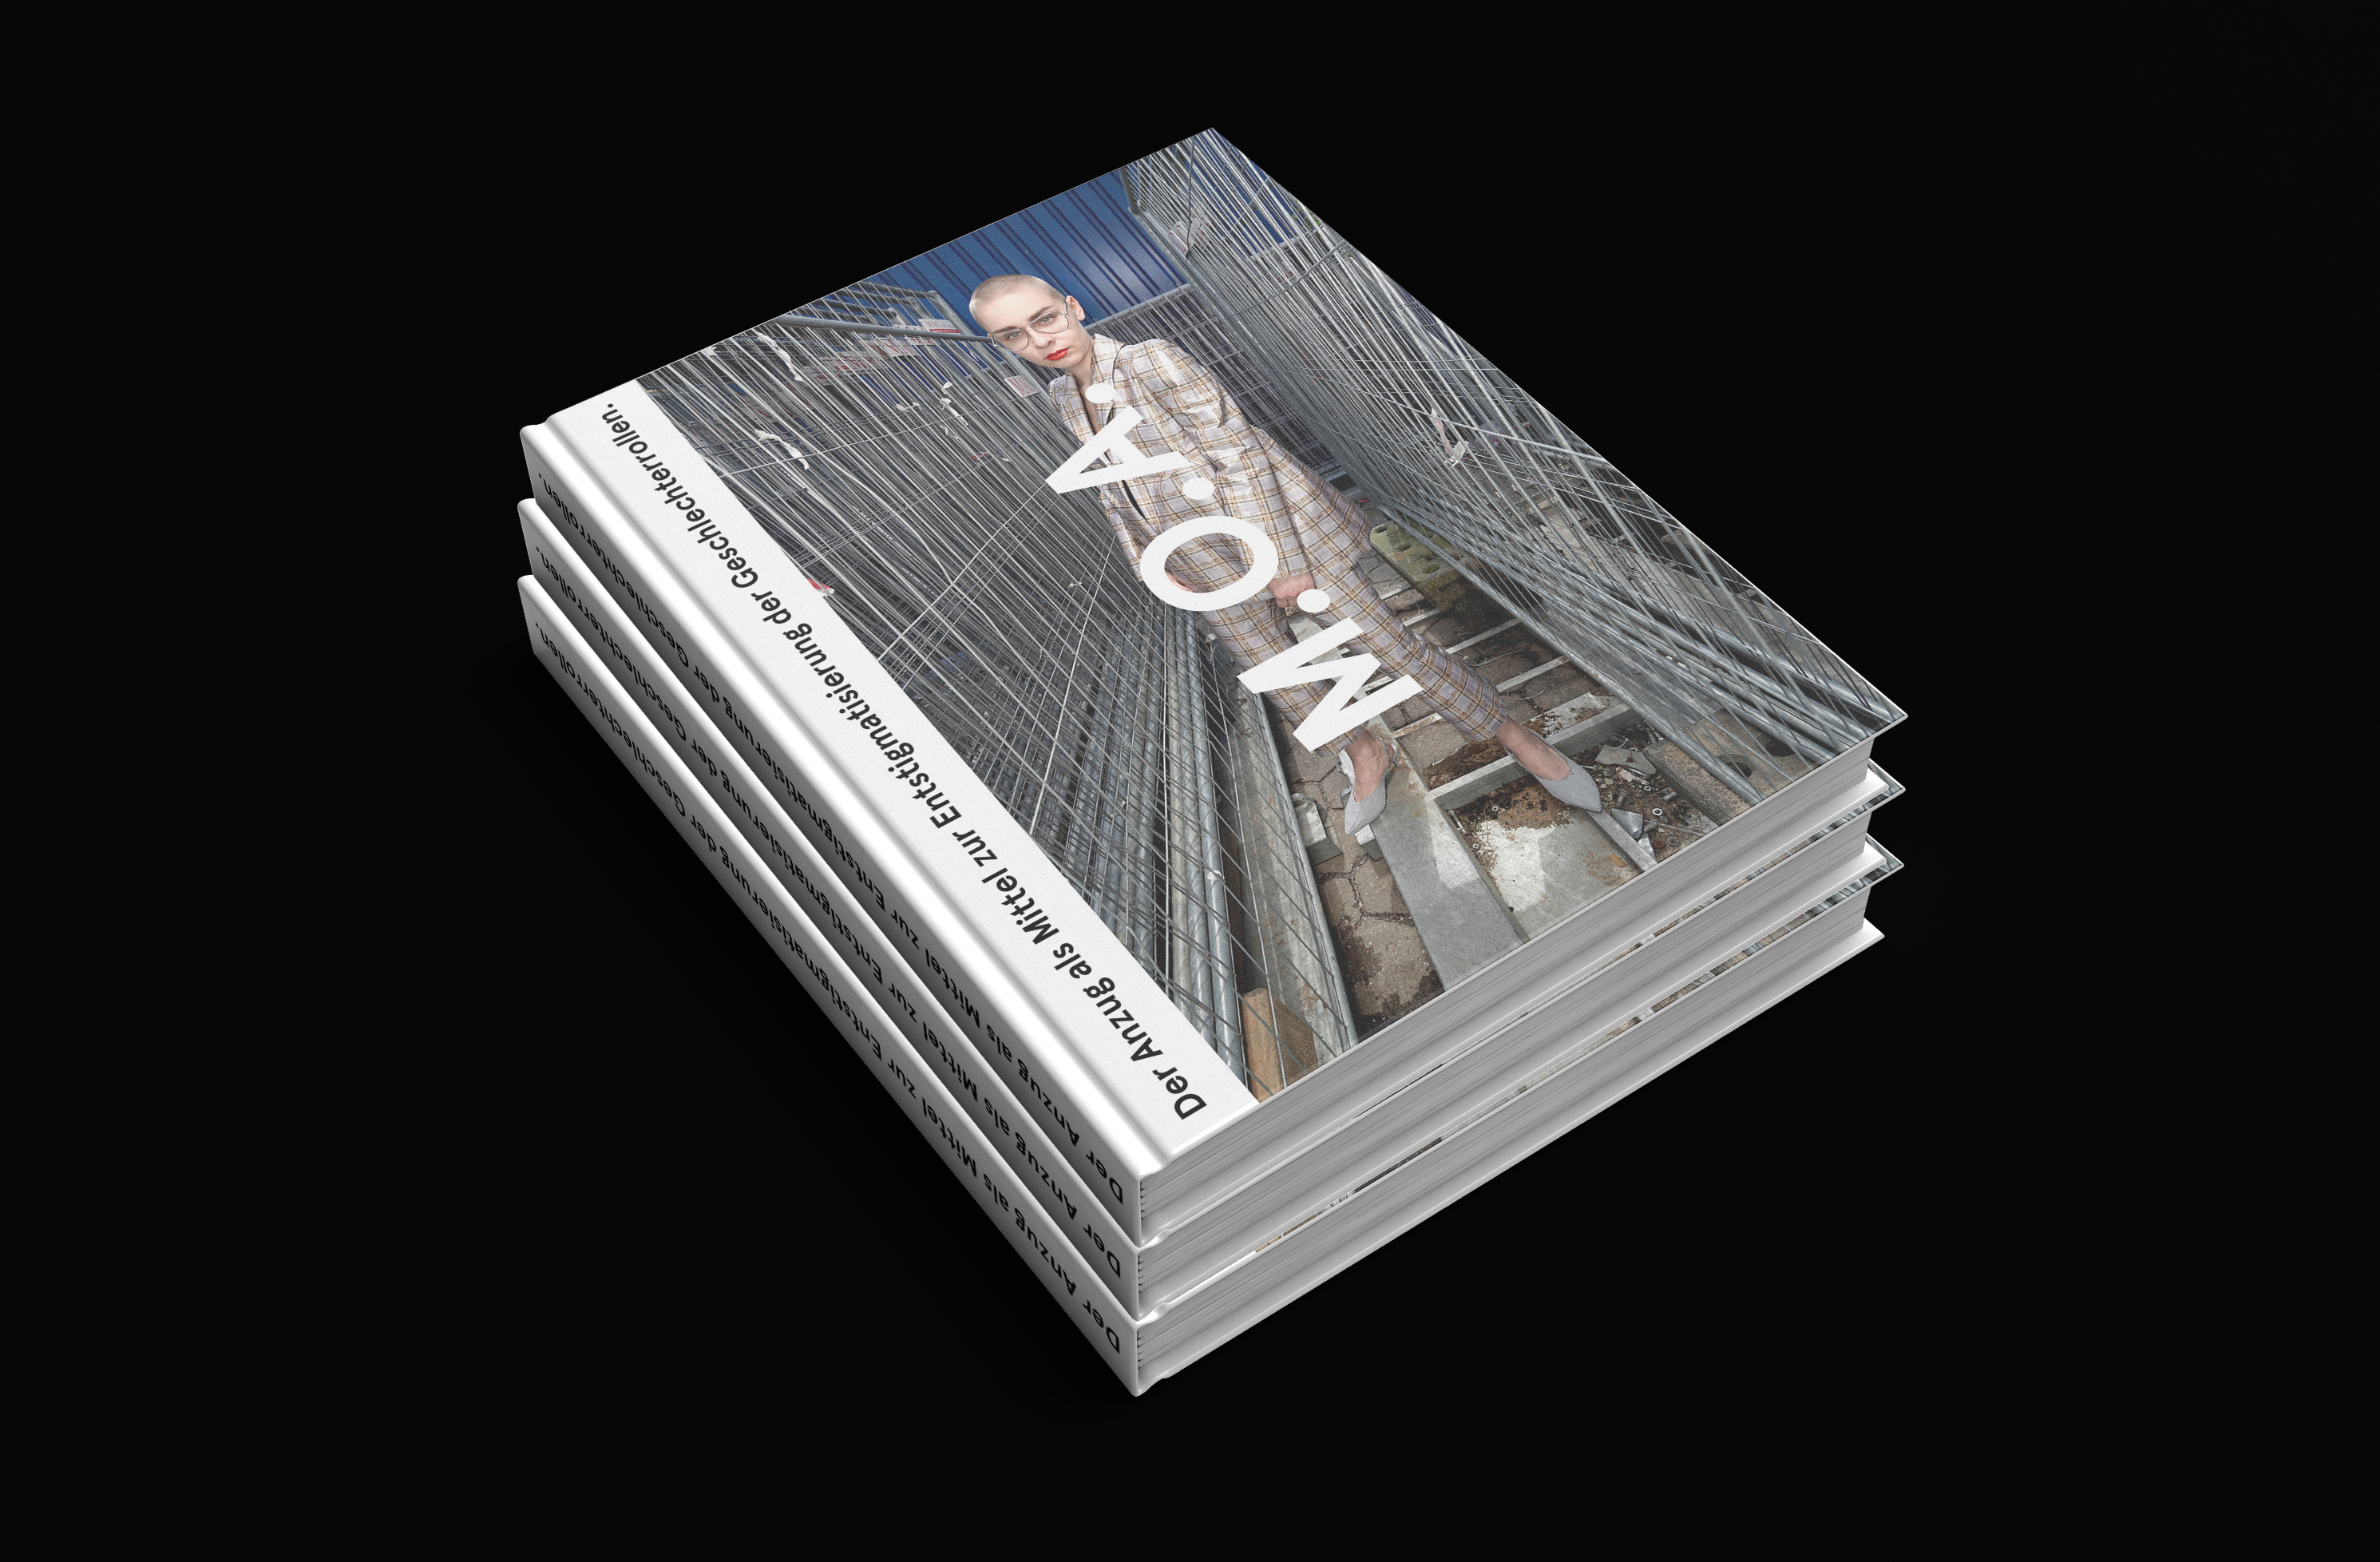 M.O.A. Lookbook by Carina Mähler - Creative Work